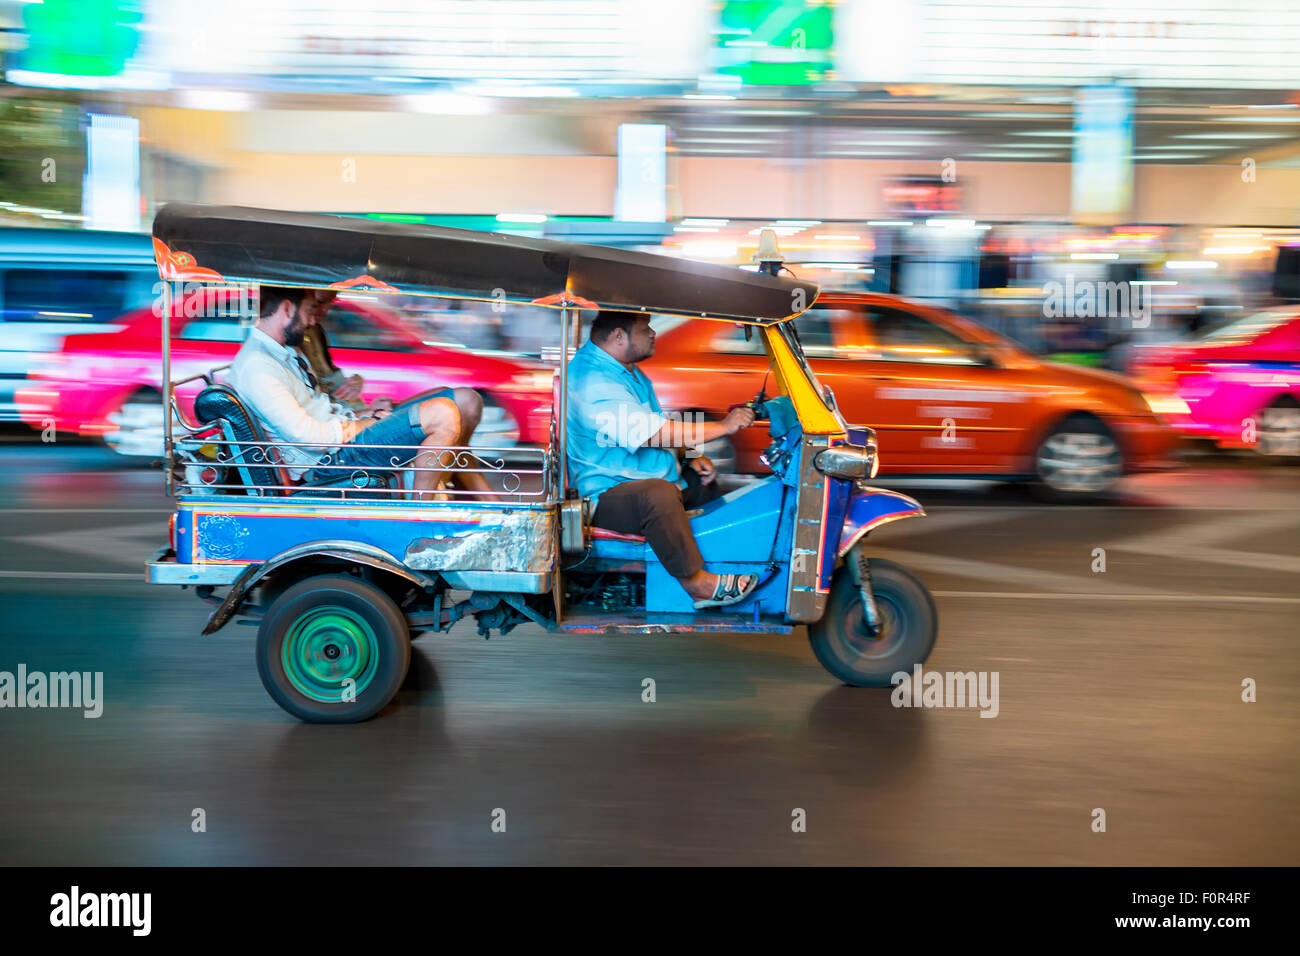 Thailand, Bangkok, tuk tuk taxi Stock Photo